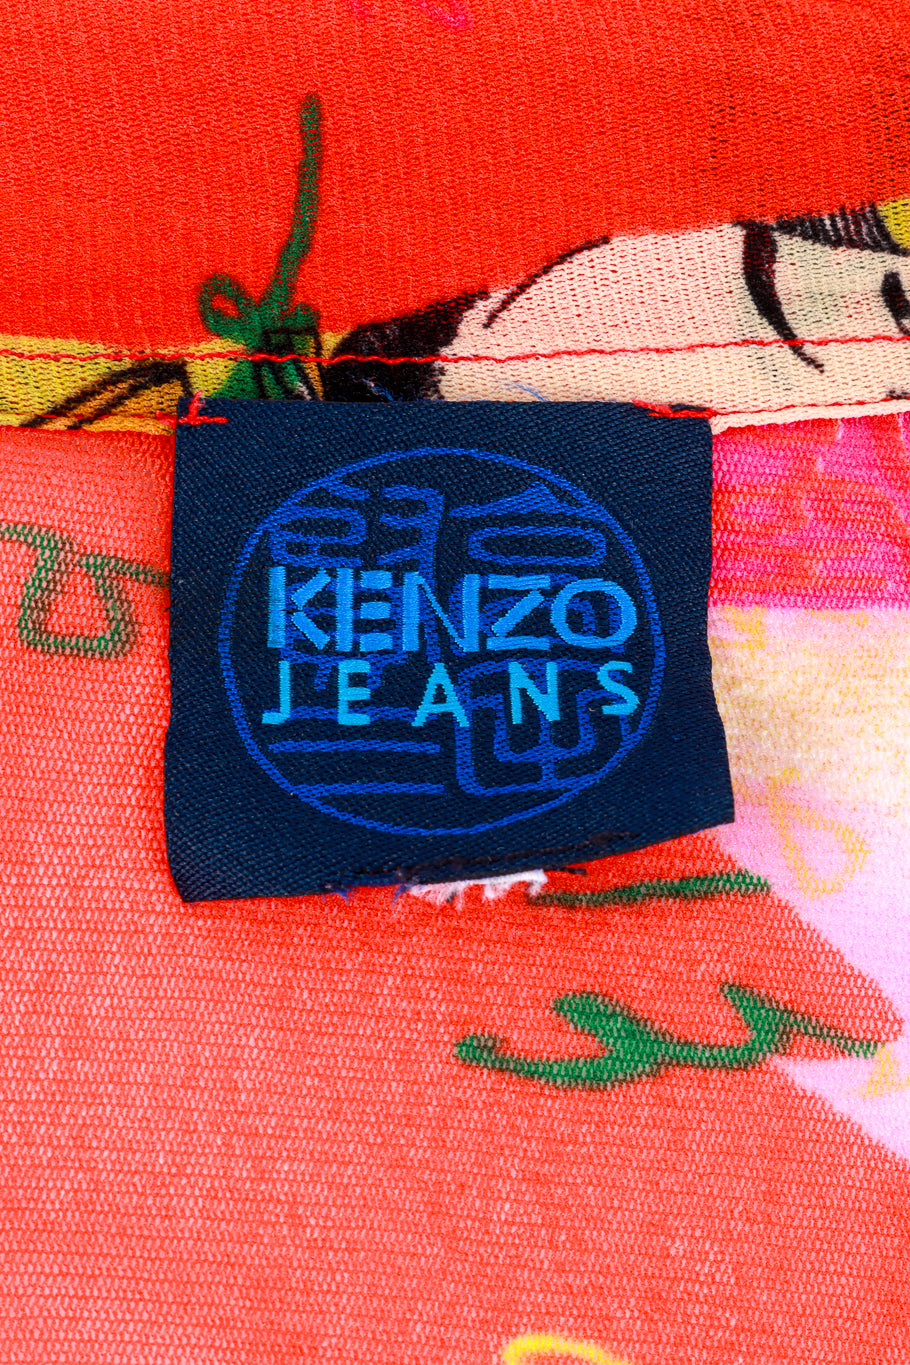 Kenzo Tokyo Nights Mesh Shirt & Pants Set label @RECESS LA